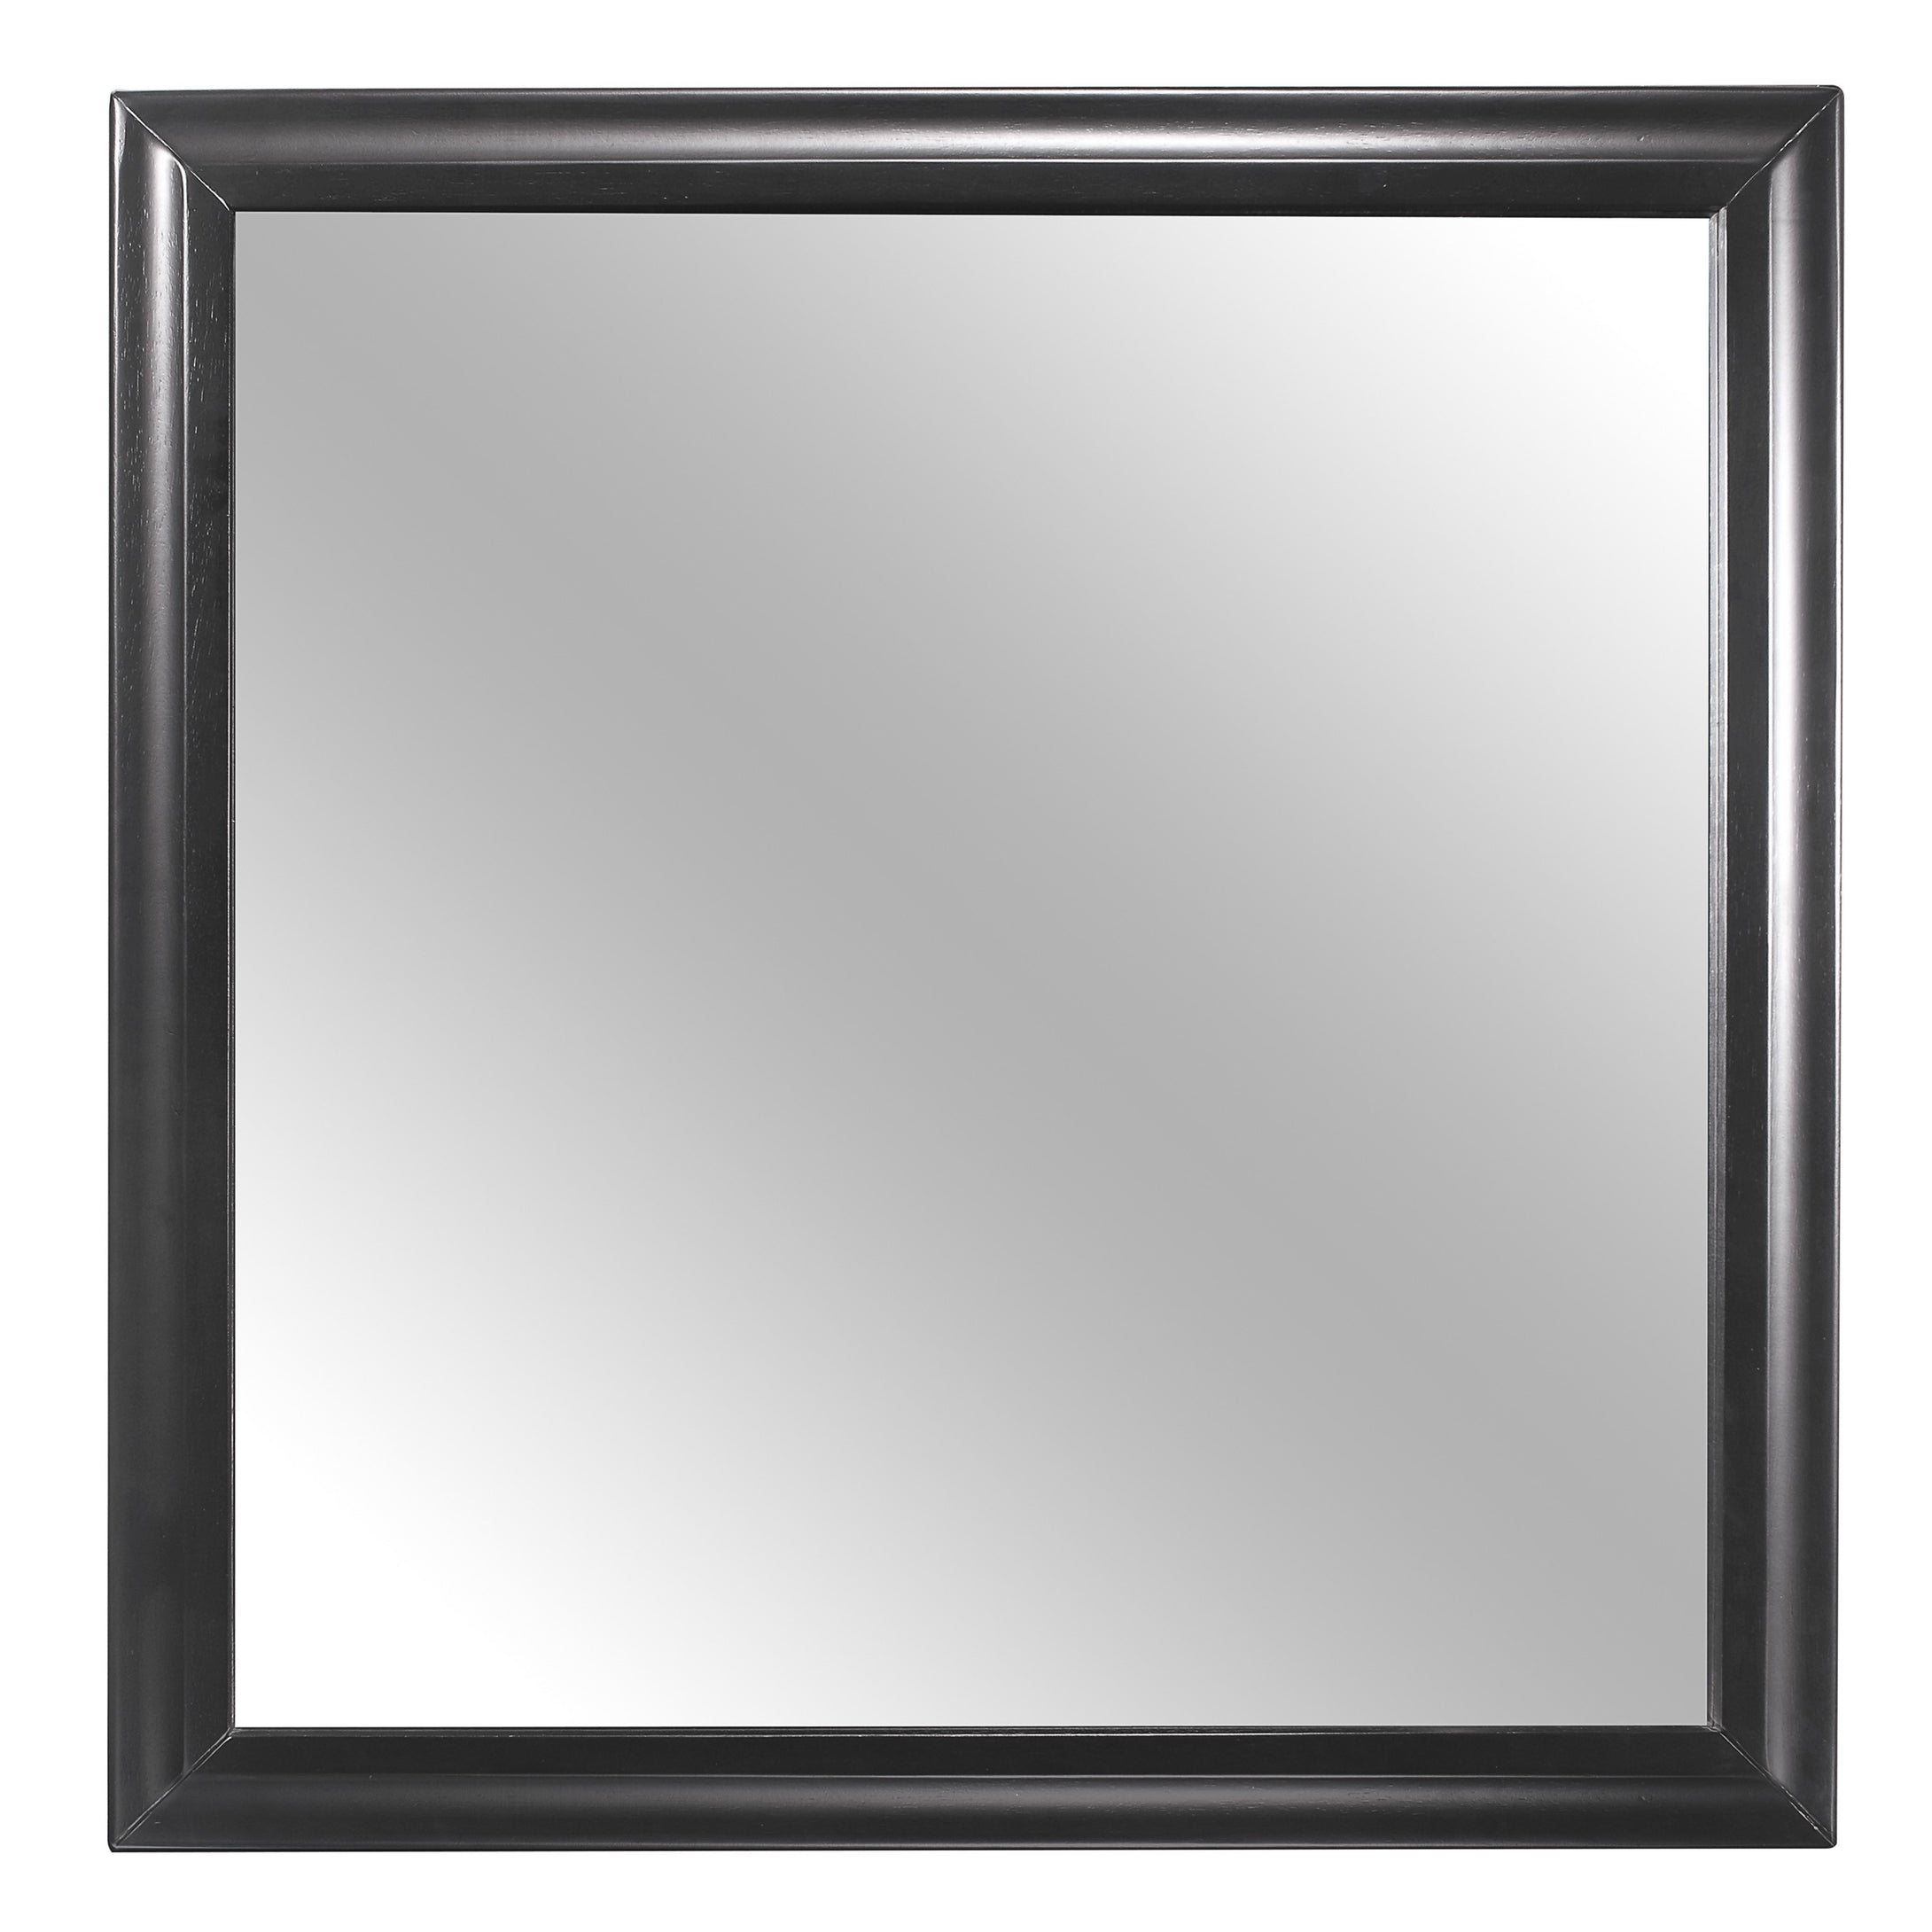 1517-6 Mirror